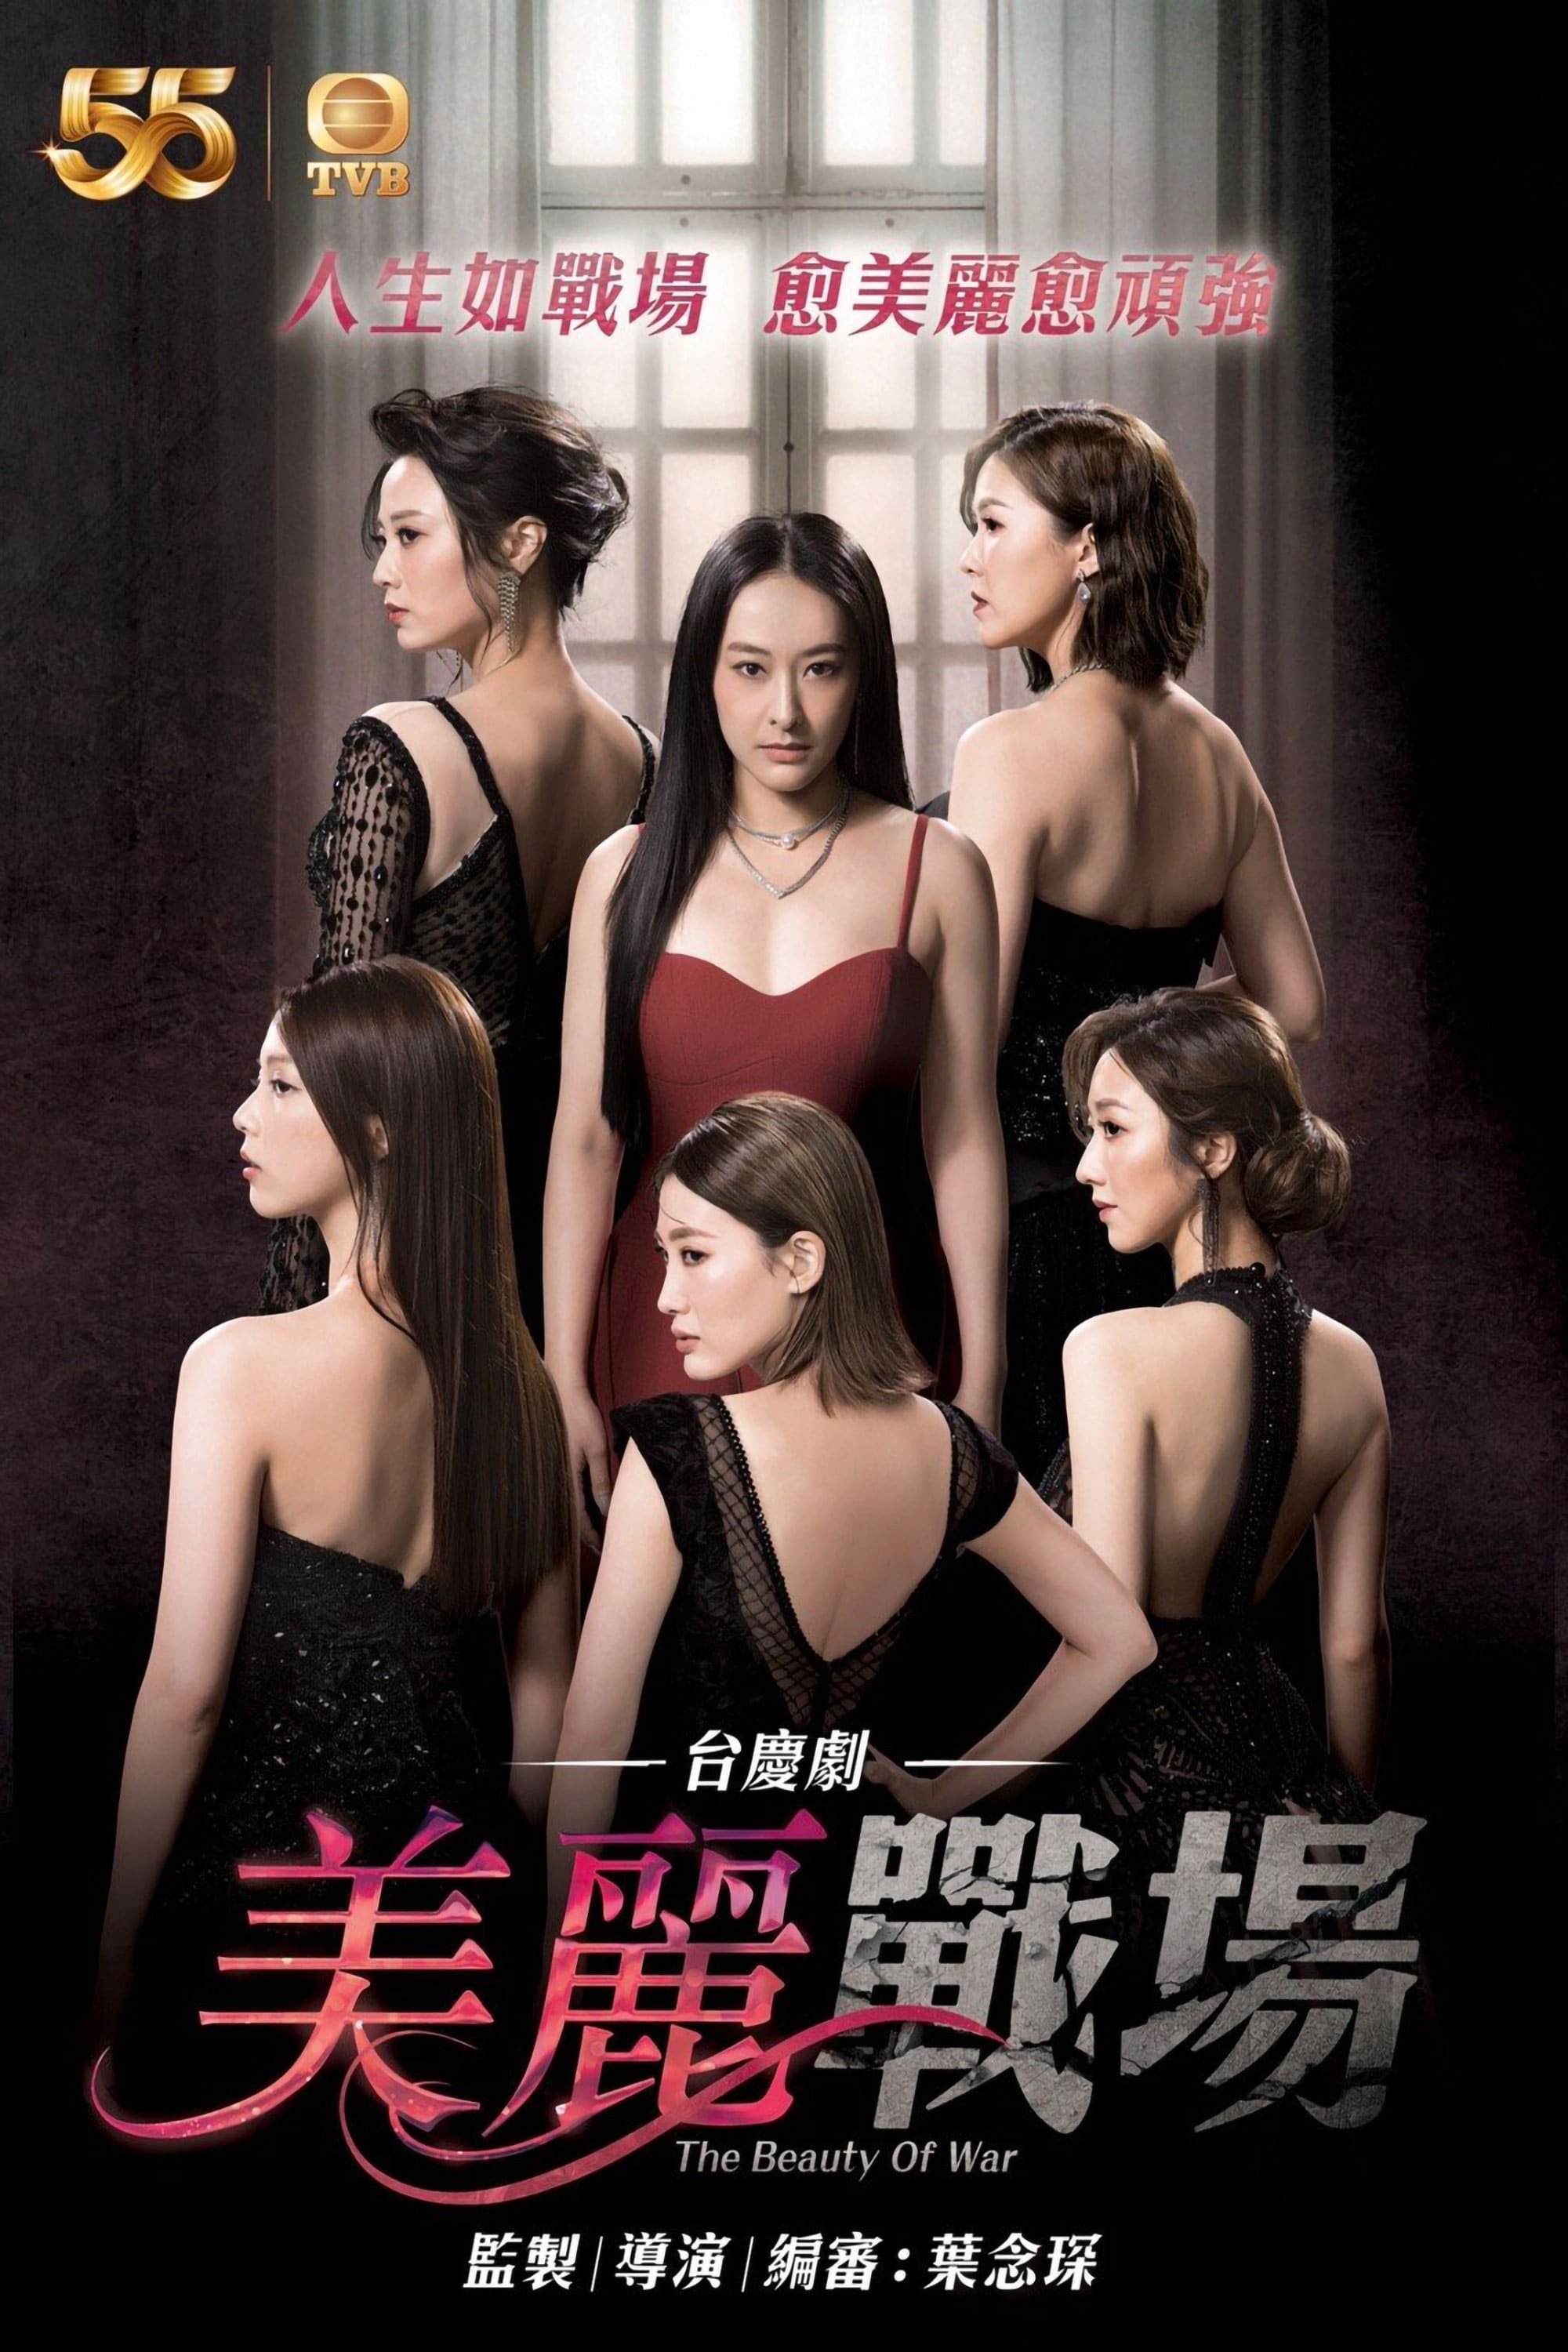 TV ratings for The War Of Beauties (美麗戰場) in Germany. TVB Jade TV series